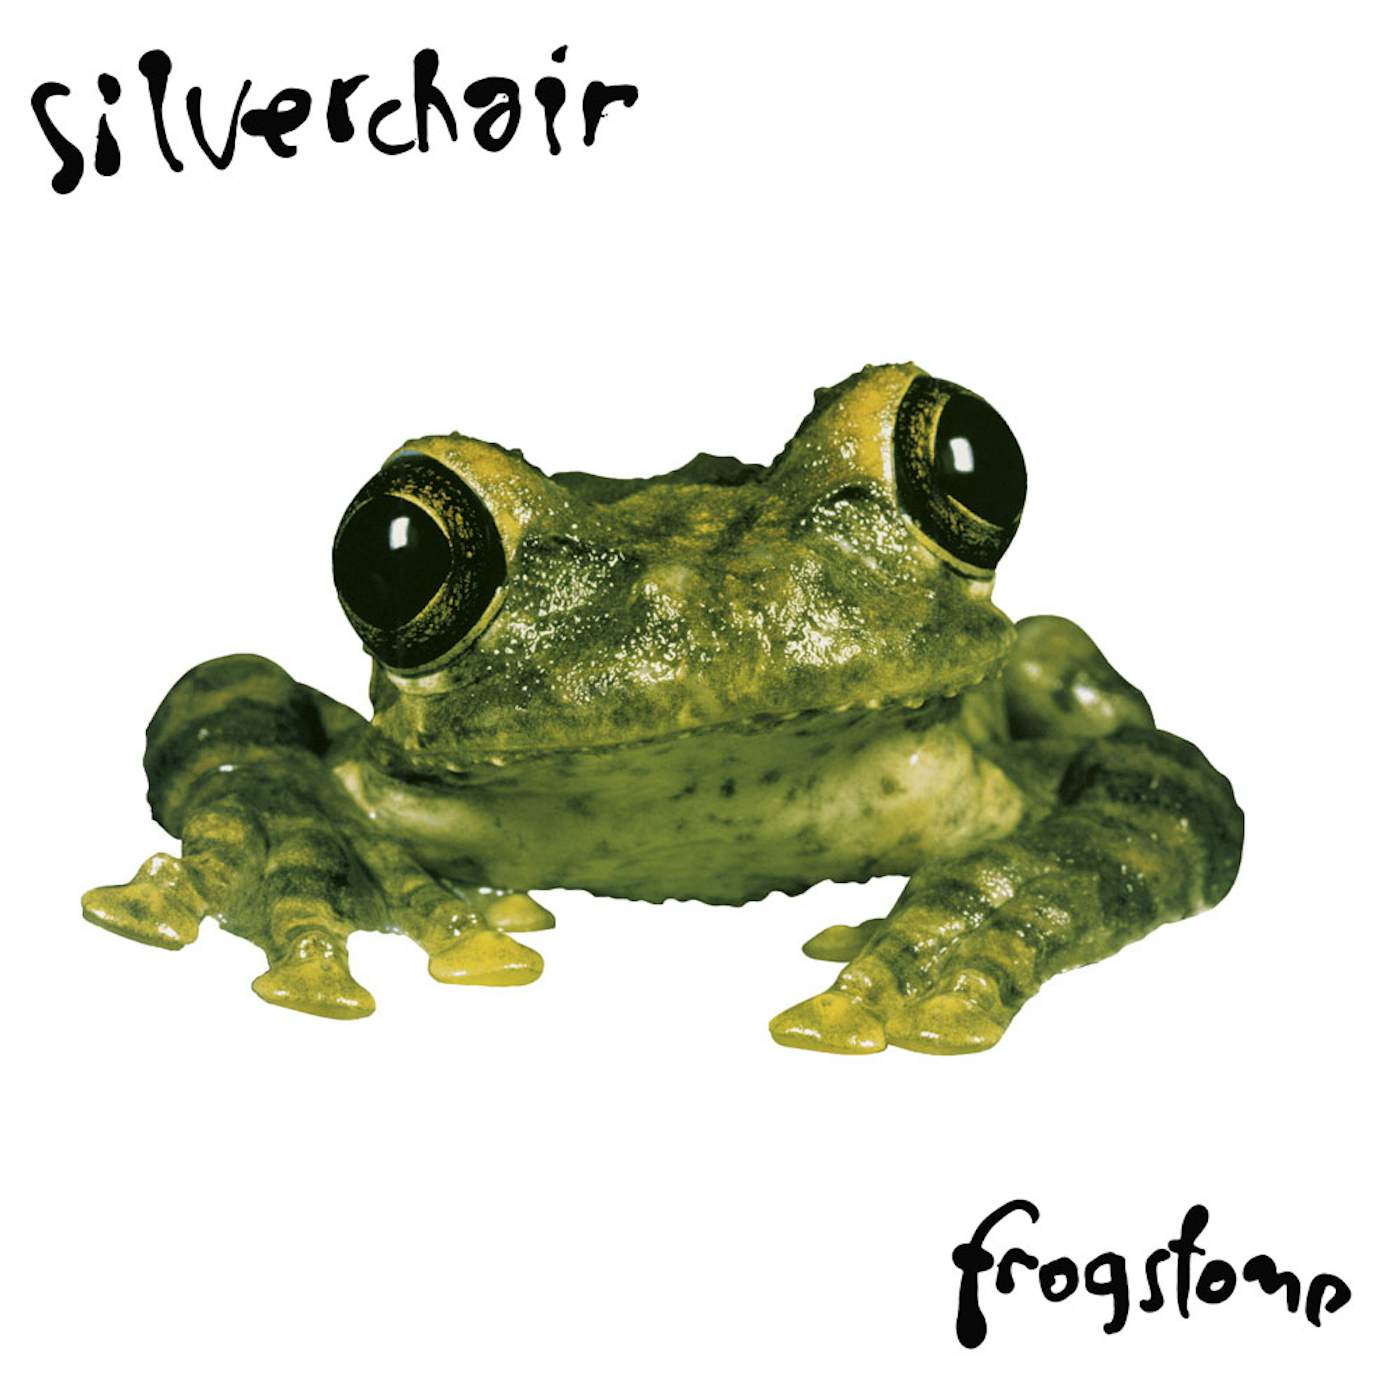 Silverchair FROGSTOMP (20TH ANNIVERSARY) (BONUS TRACK) Vinyl Record - Colored Vinyl